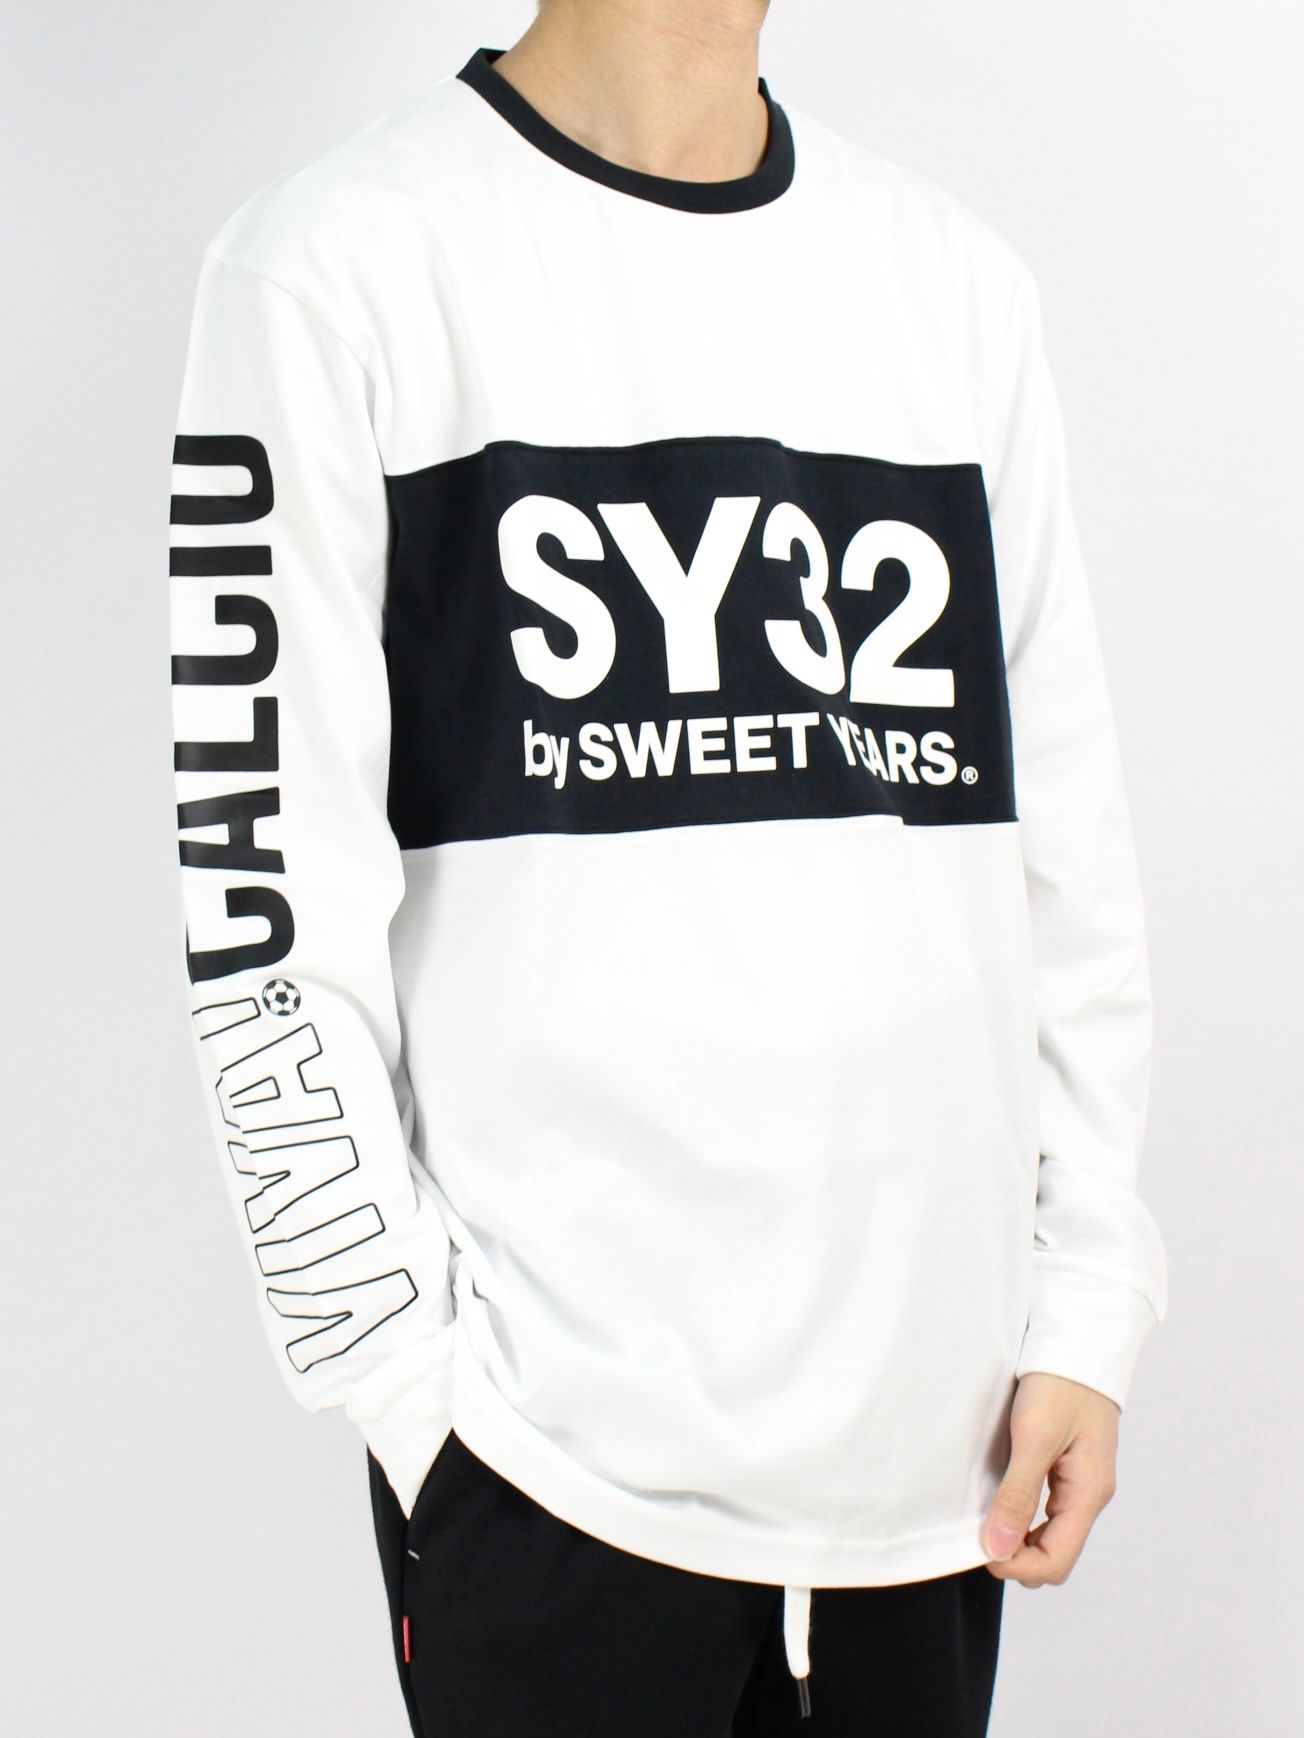 SY32 by SWEET YEARS - バイカラー ラバーロゴ ロングスリーブTシャツ